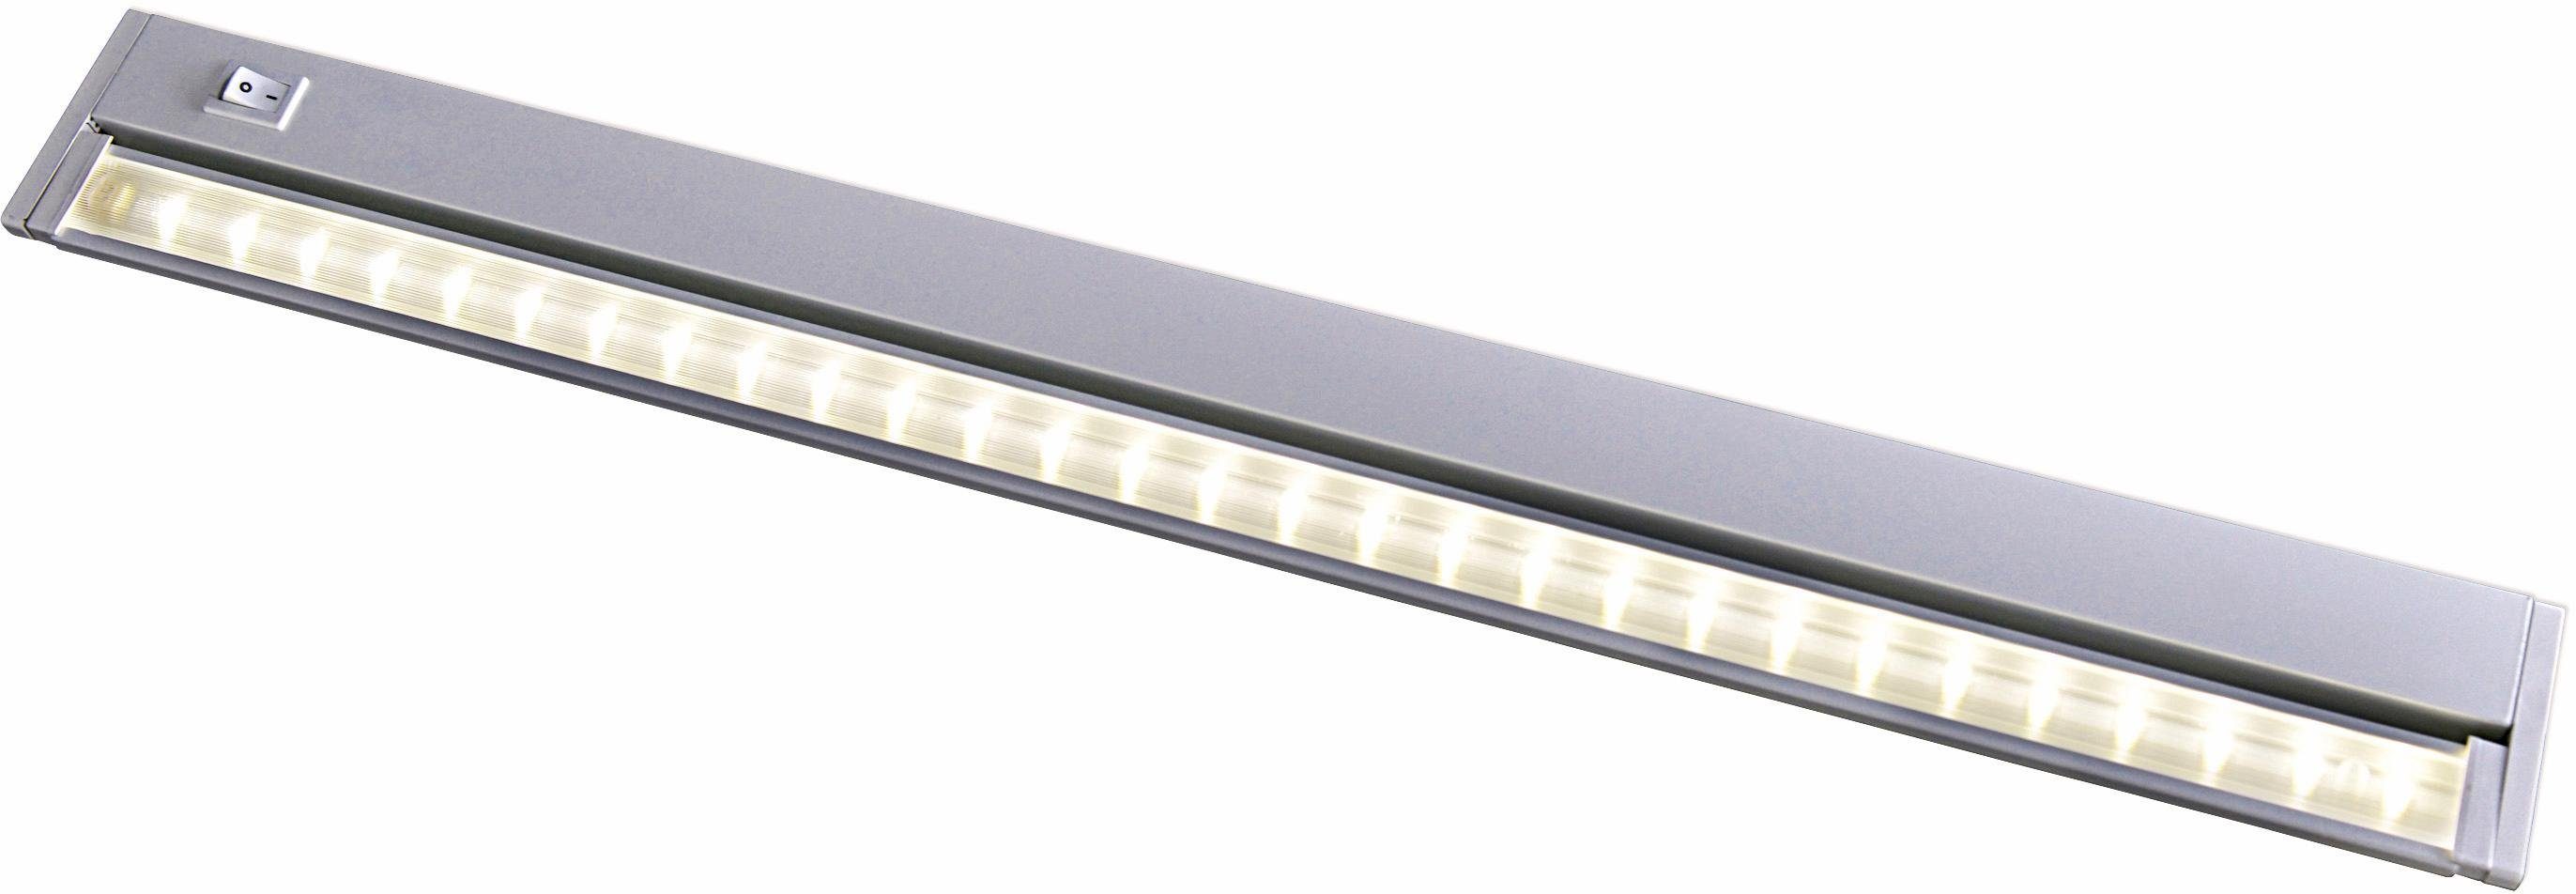 näve Lichtleiste FUNCTION, LED fest Länge integriert, Neutralweiß, 58,6 cm Möbelleuchte